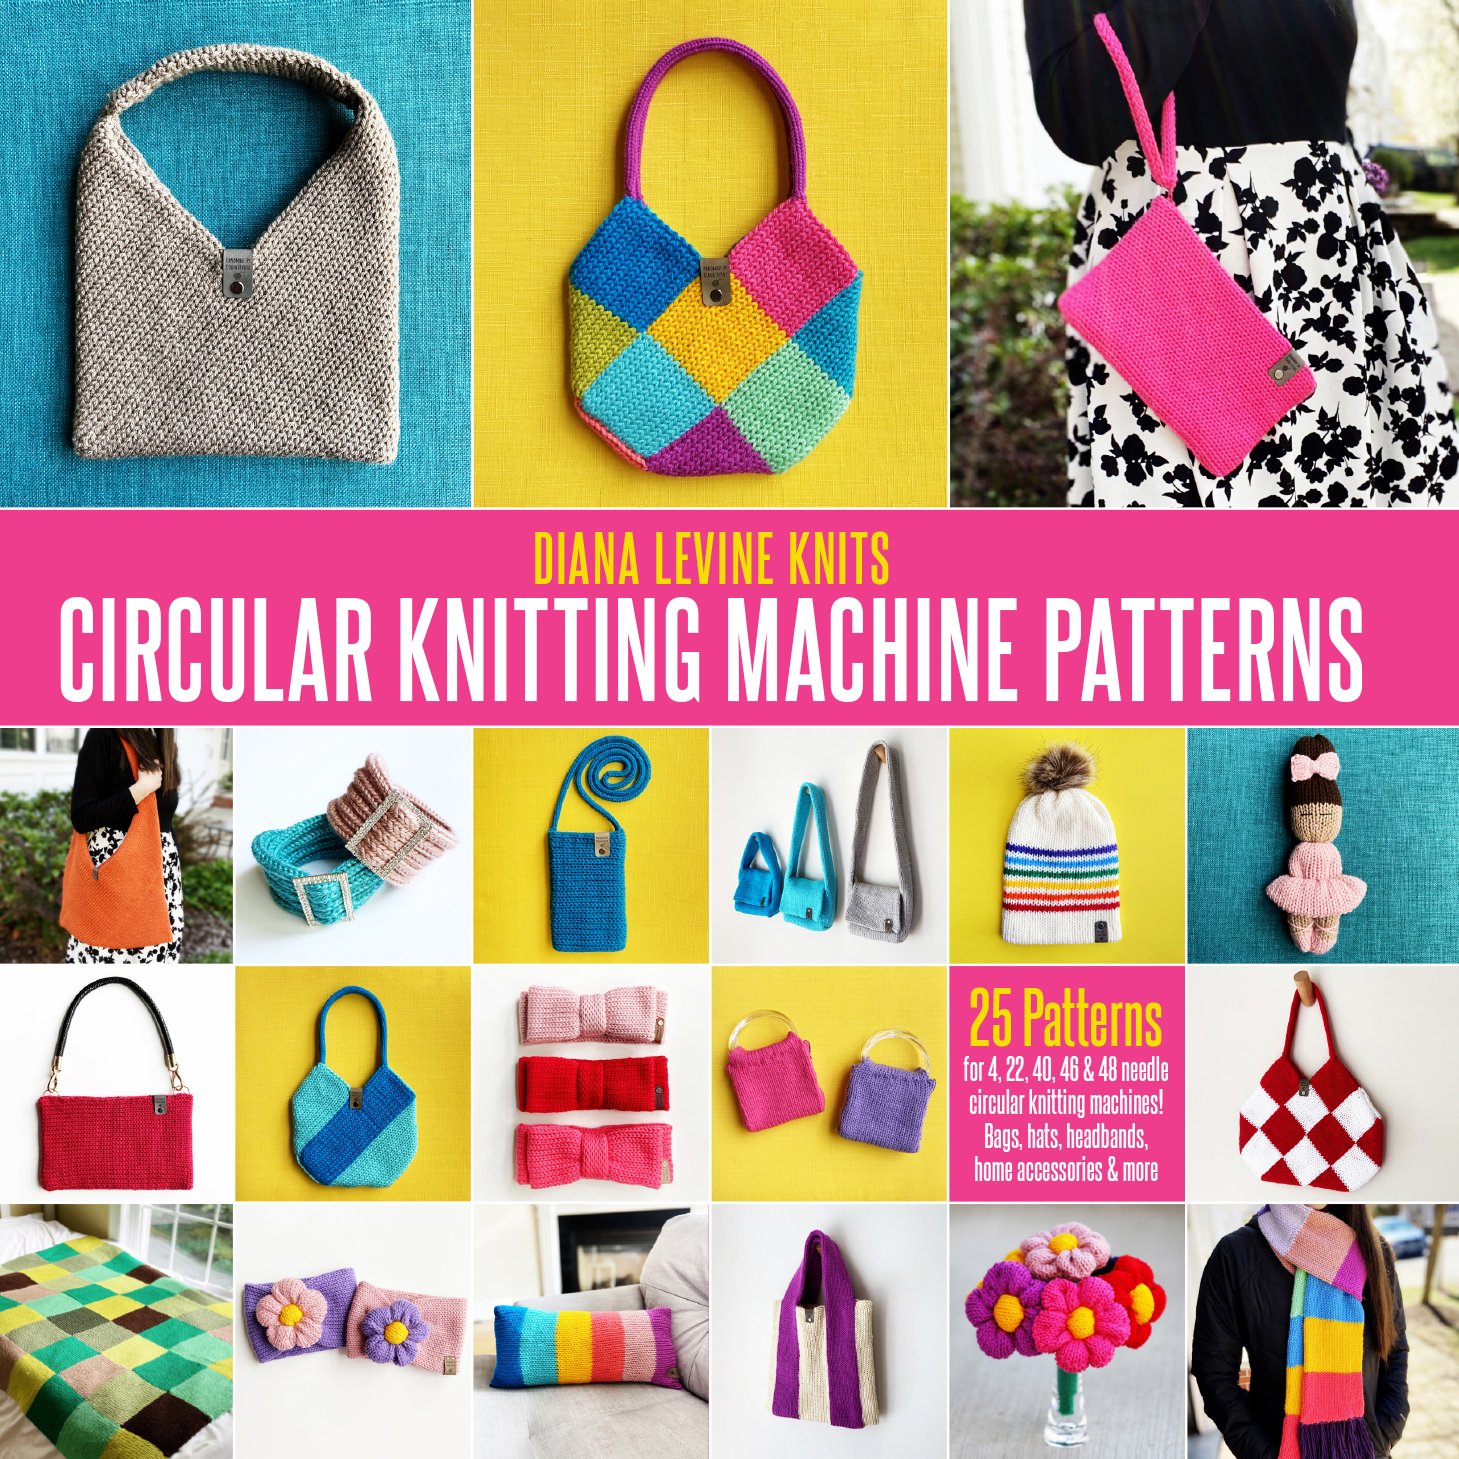 Free Wreath Scarf, Addi + Sentro Circular Knitting Machine Pattern!